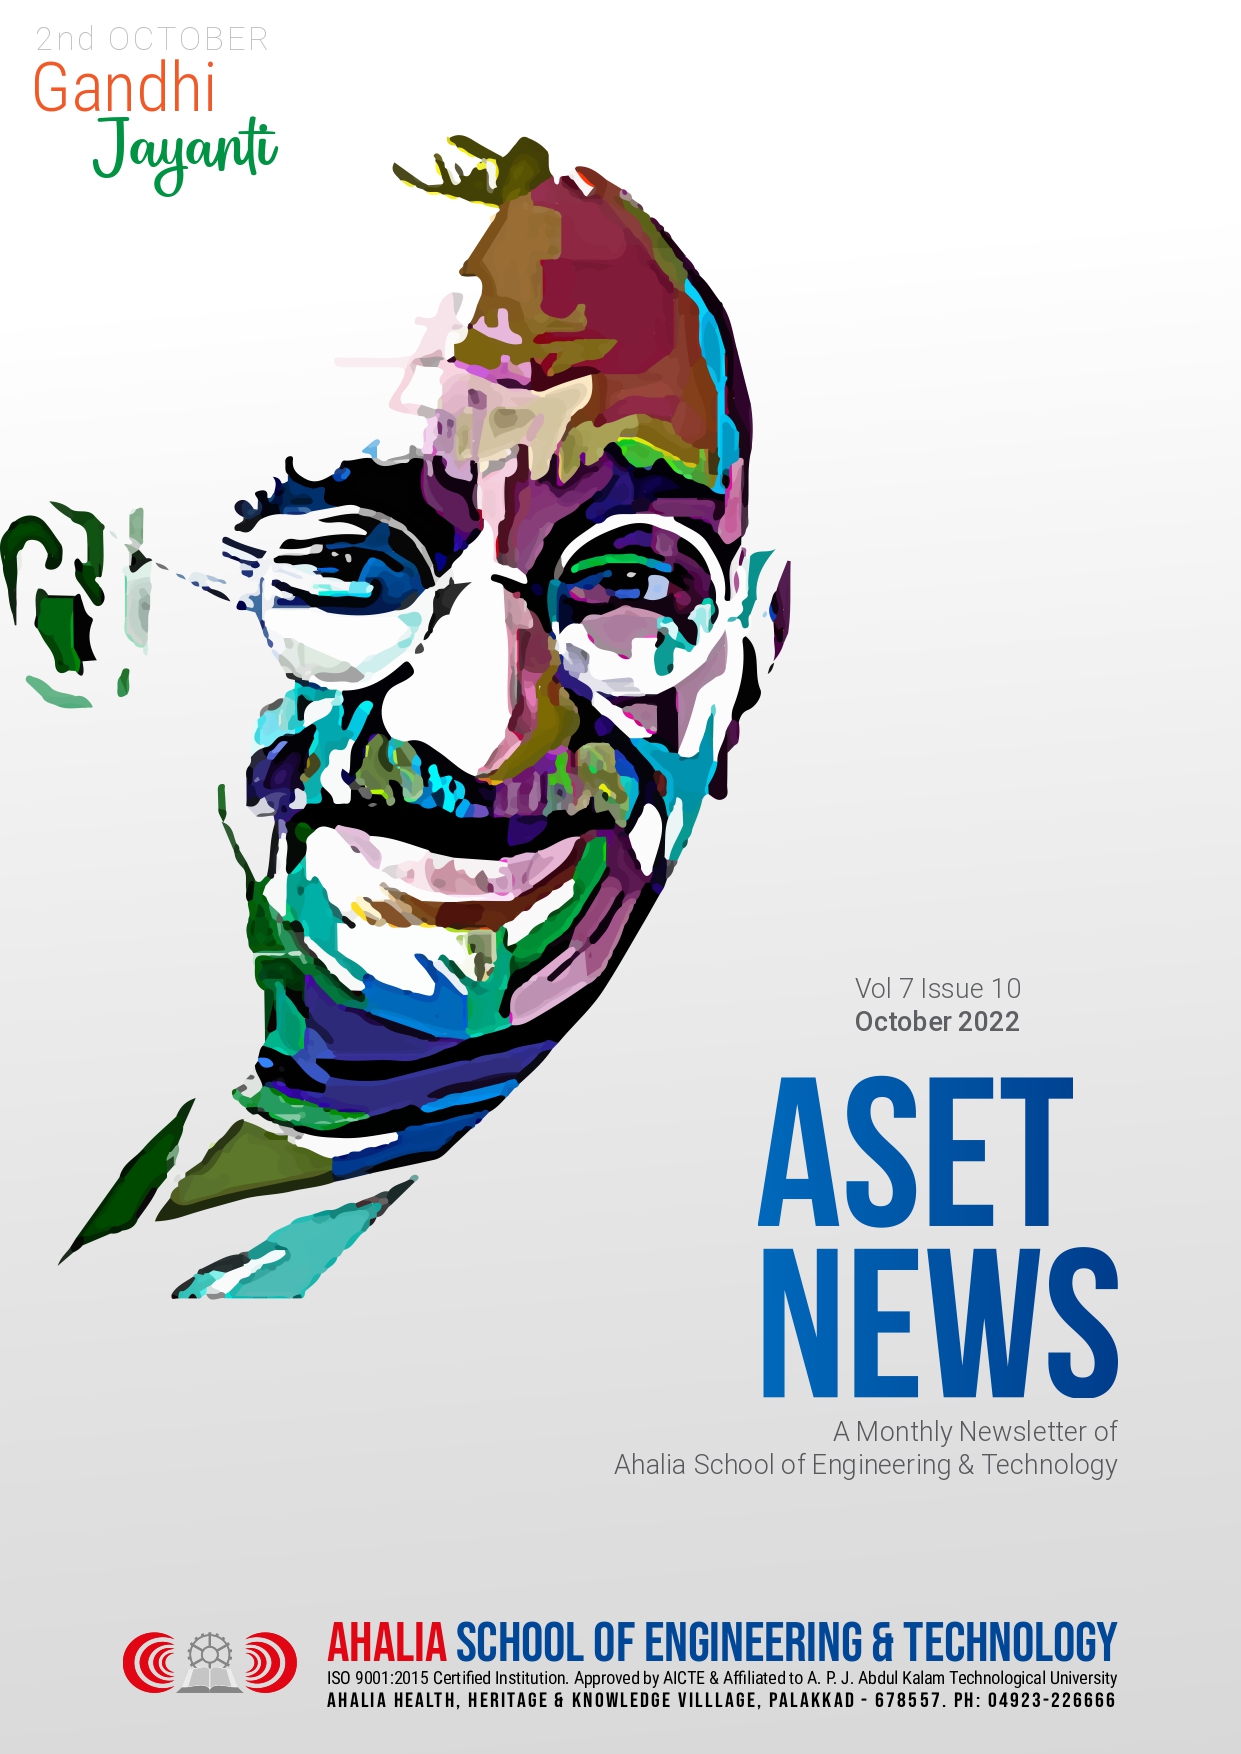 October 2022 ASET NEWS Released